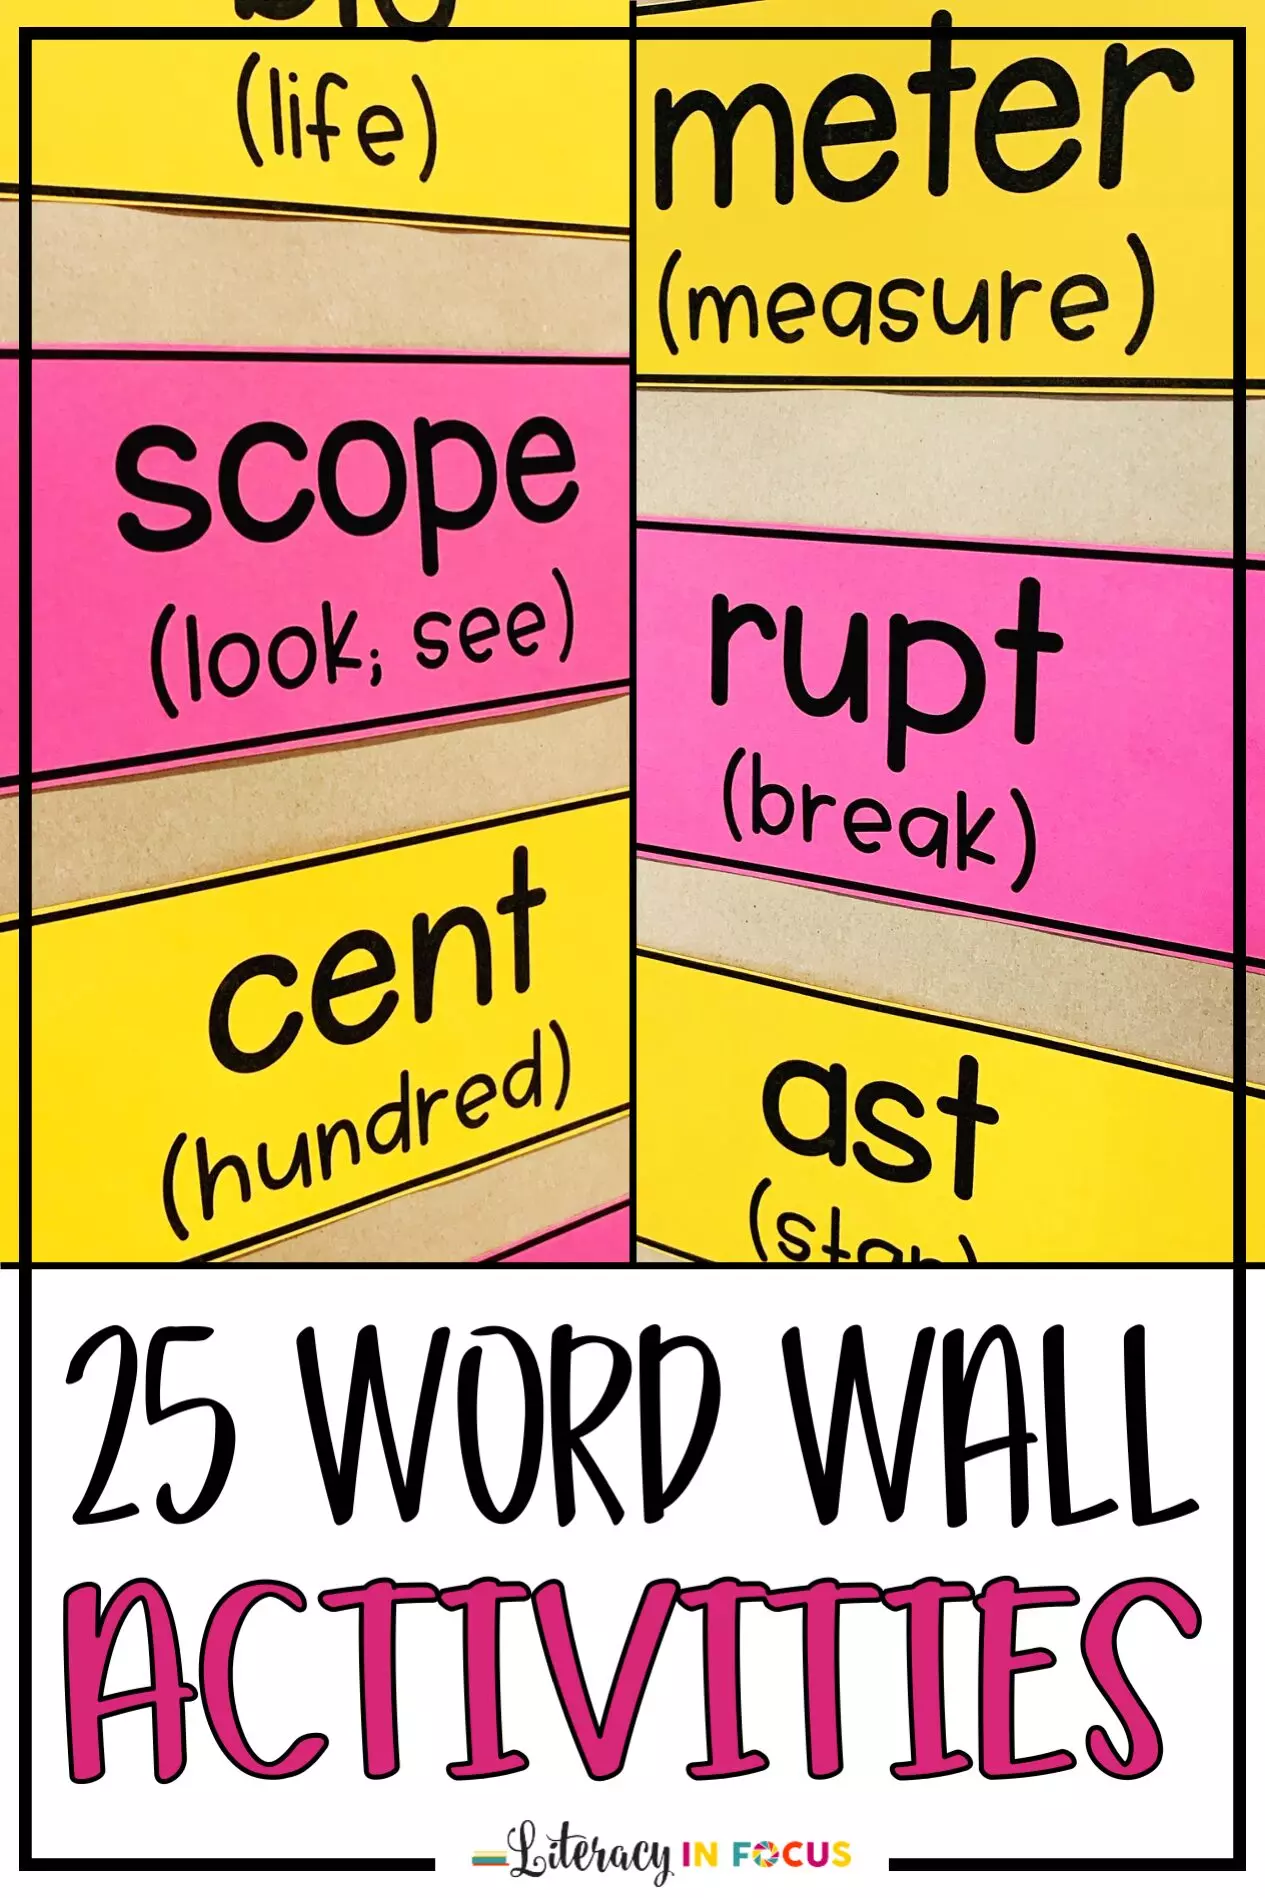 25 Word Wall Activities